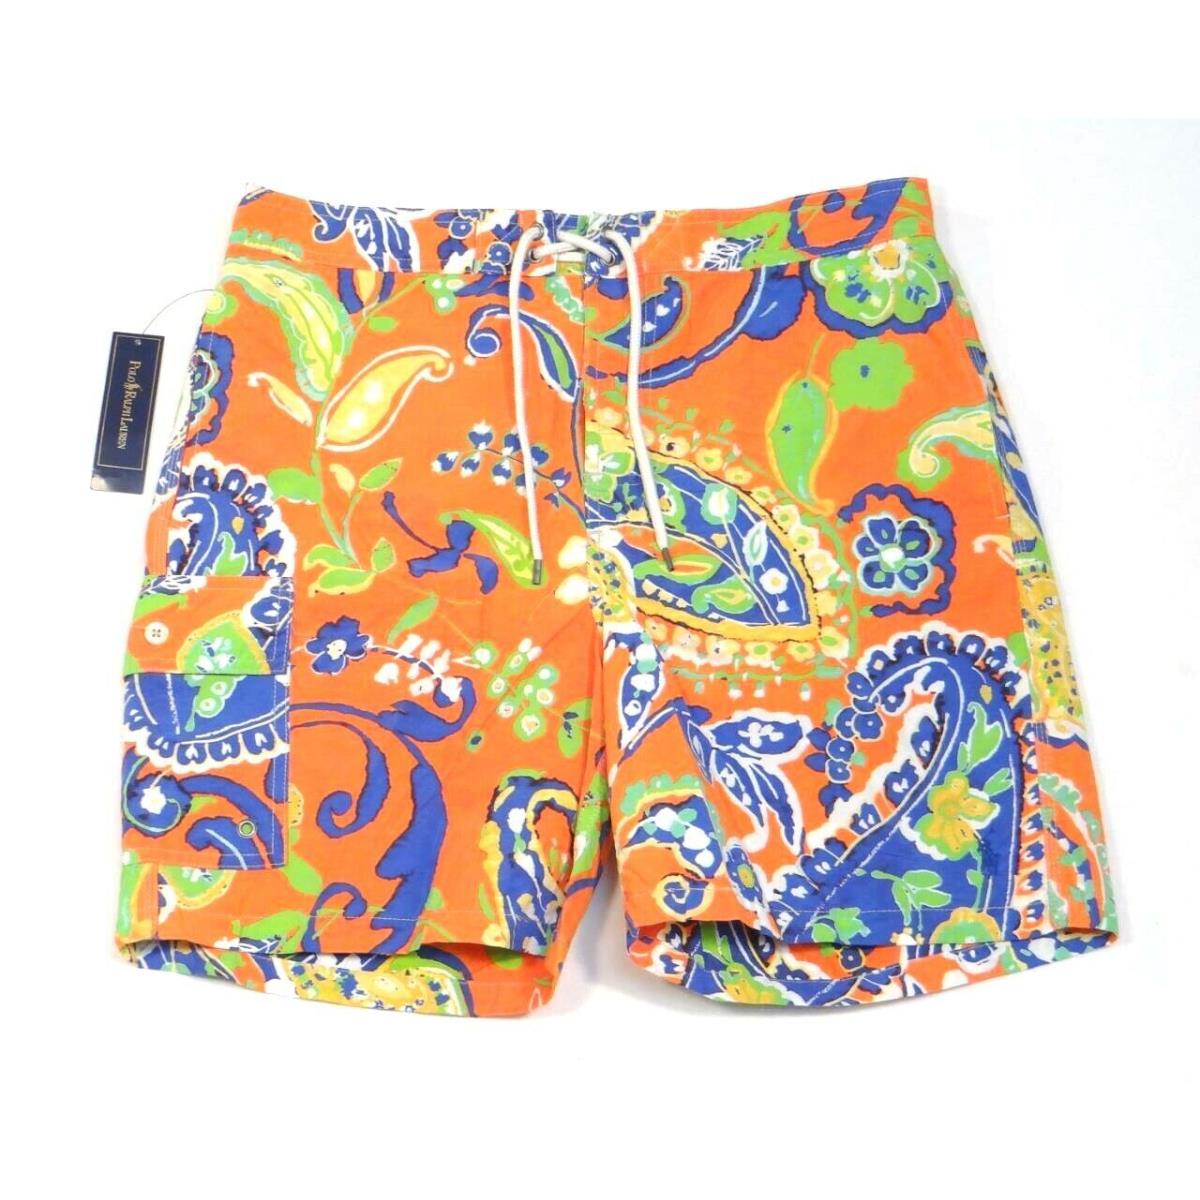 Ralph Lauren Orange Floral Swim Trunks Boardshorts with Carry Bag Mens